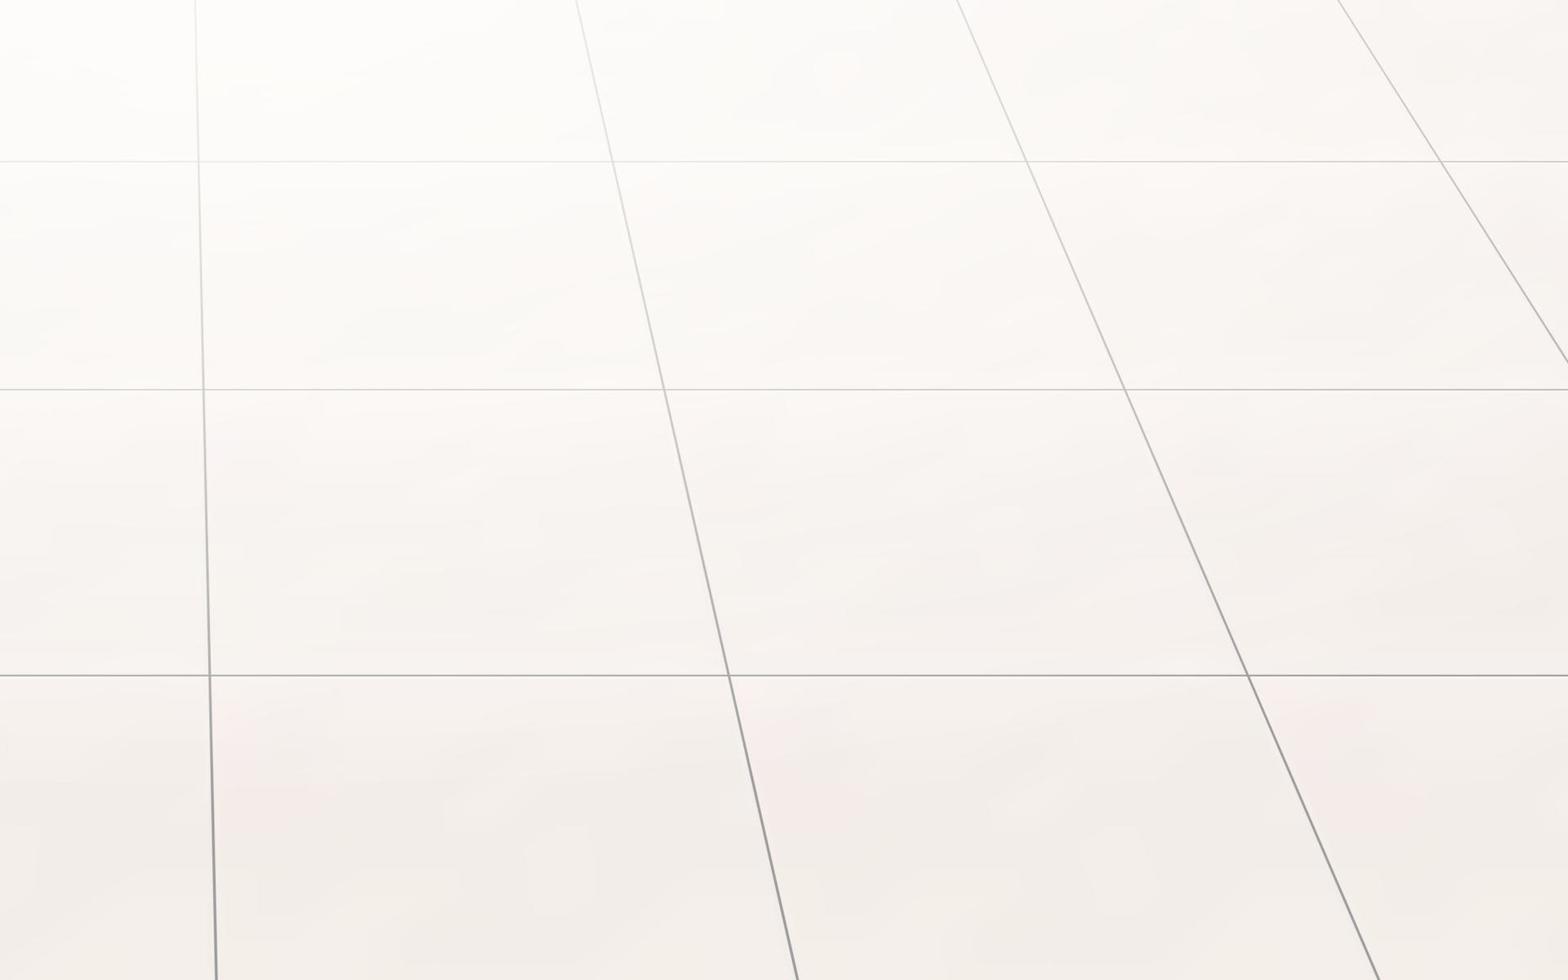 blanco embaldosado piso en 3d ilustración, lata ser usado para piso limpiador anuncios antecedentes. vector